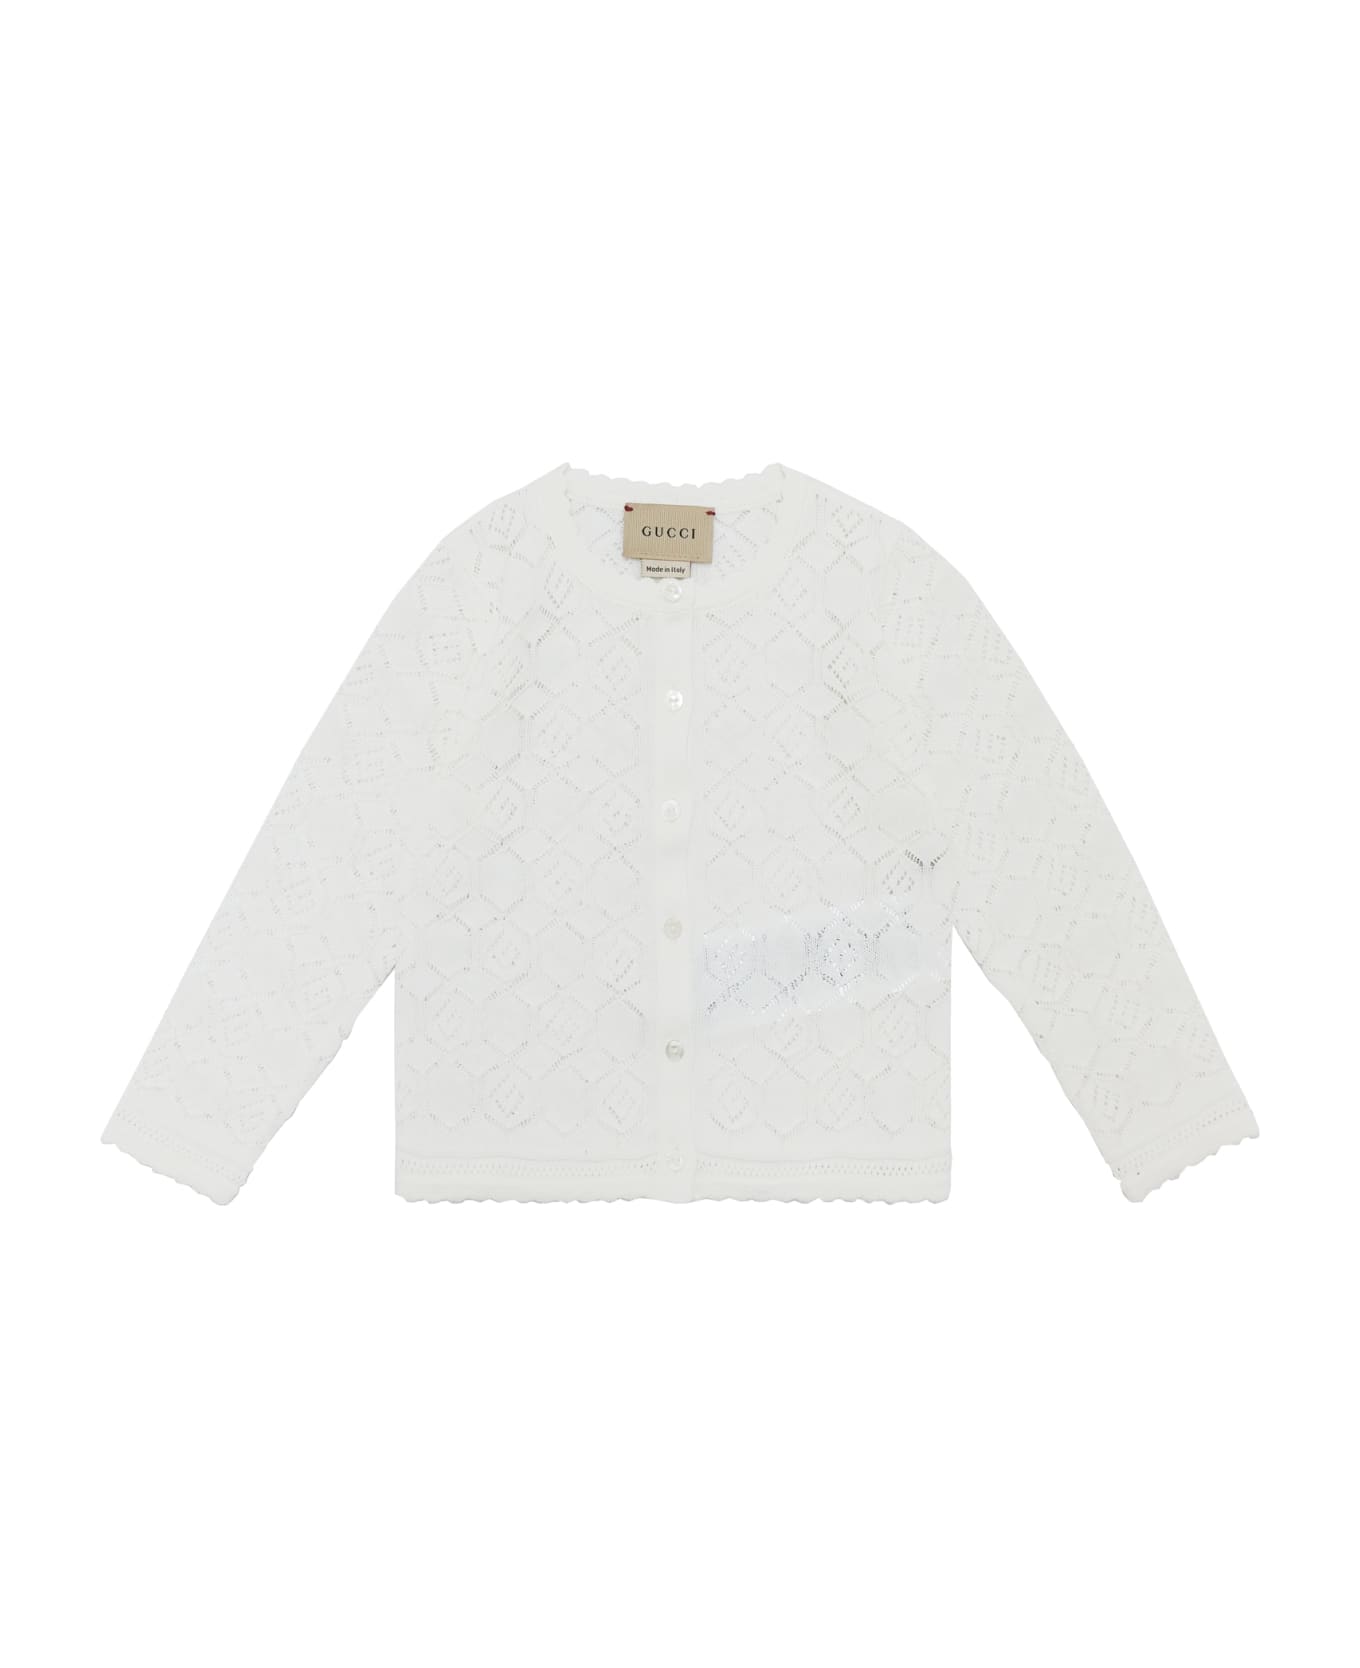 Gucci Embroidered Sweater - White